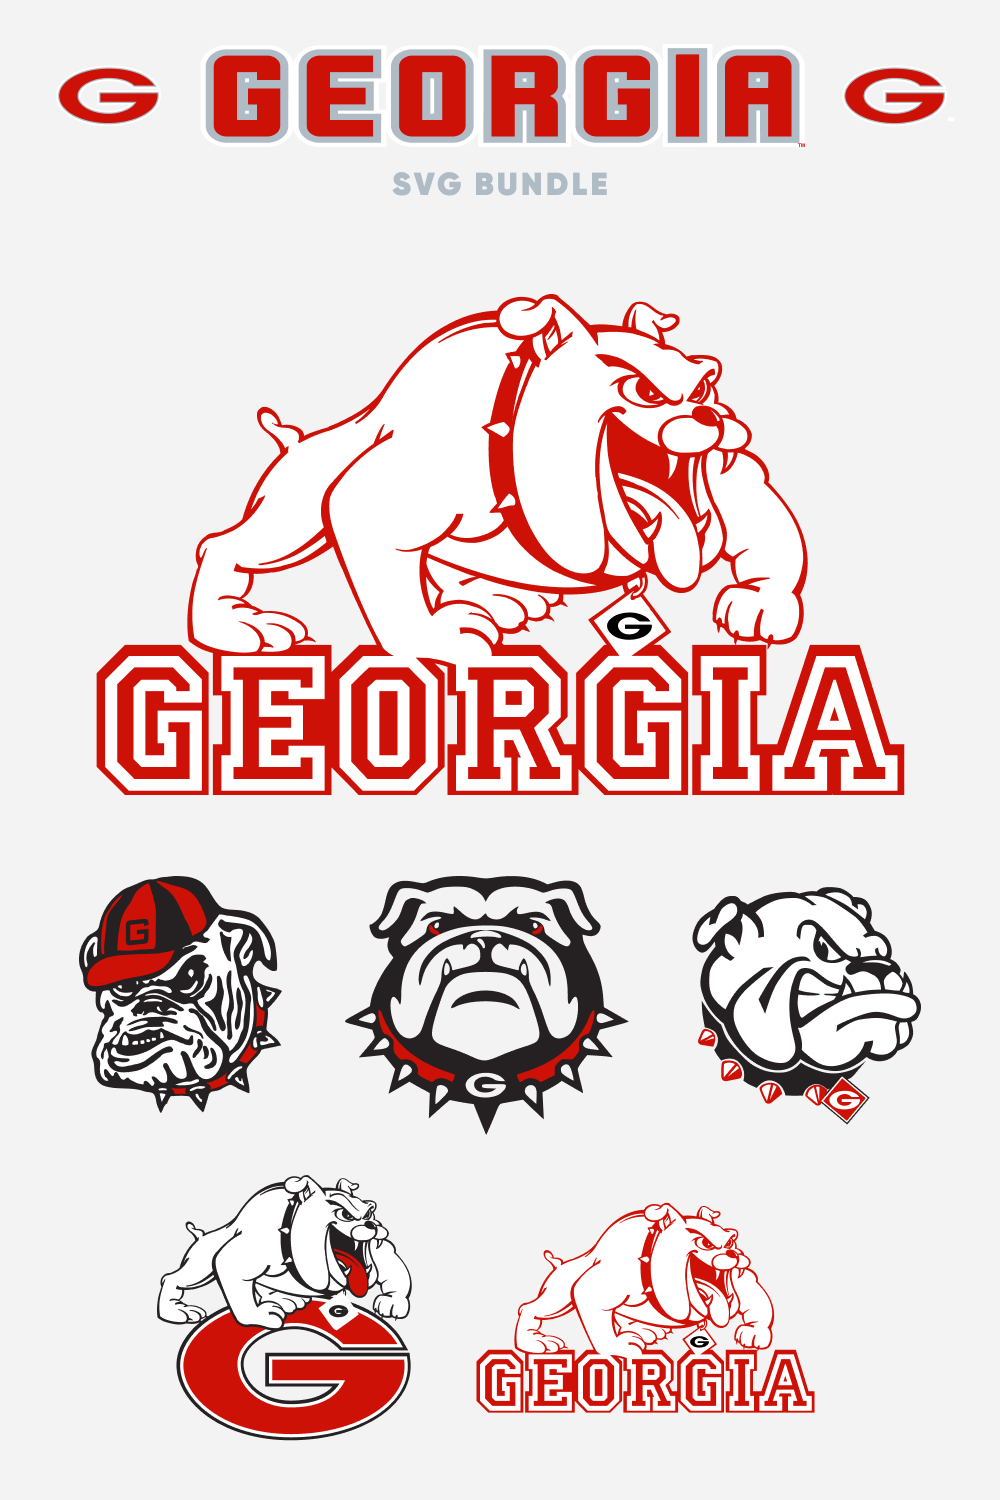 Georgia bulldogs SVG bundle.